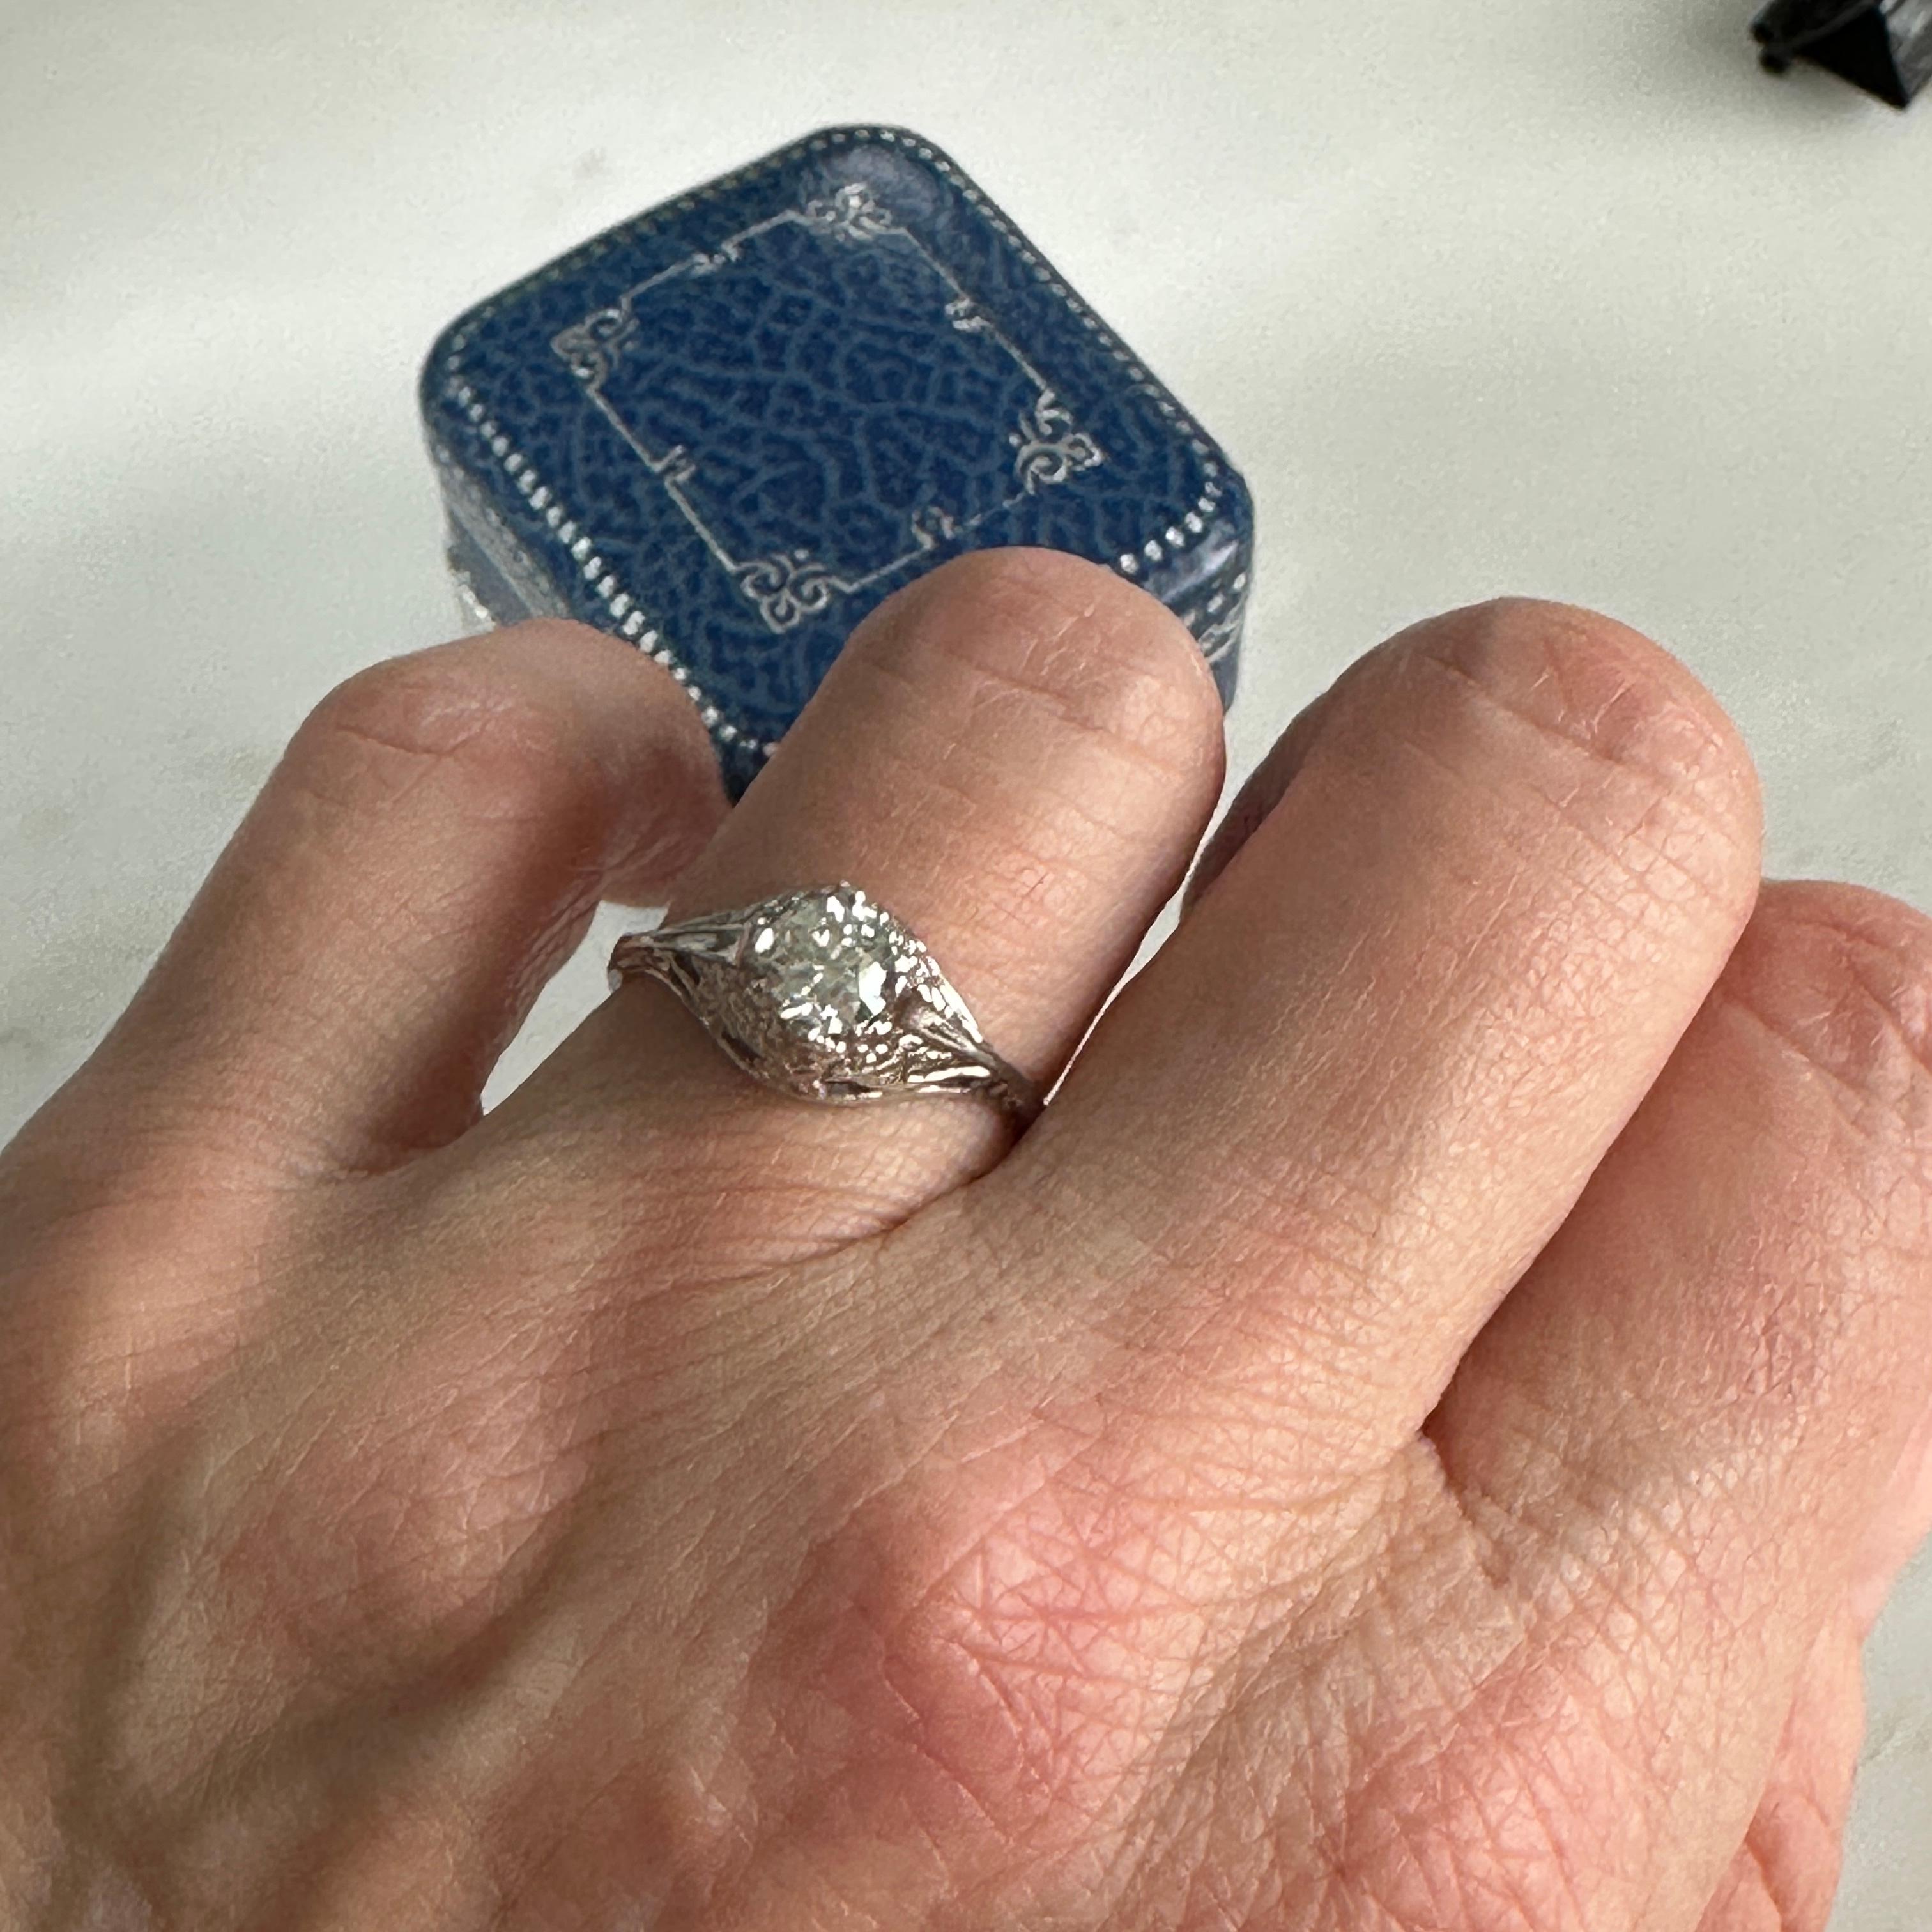 50 carat diamond ring